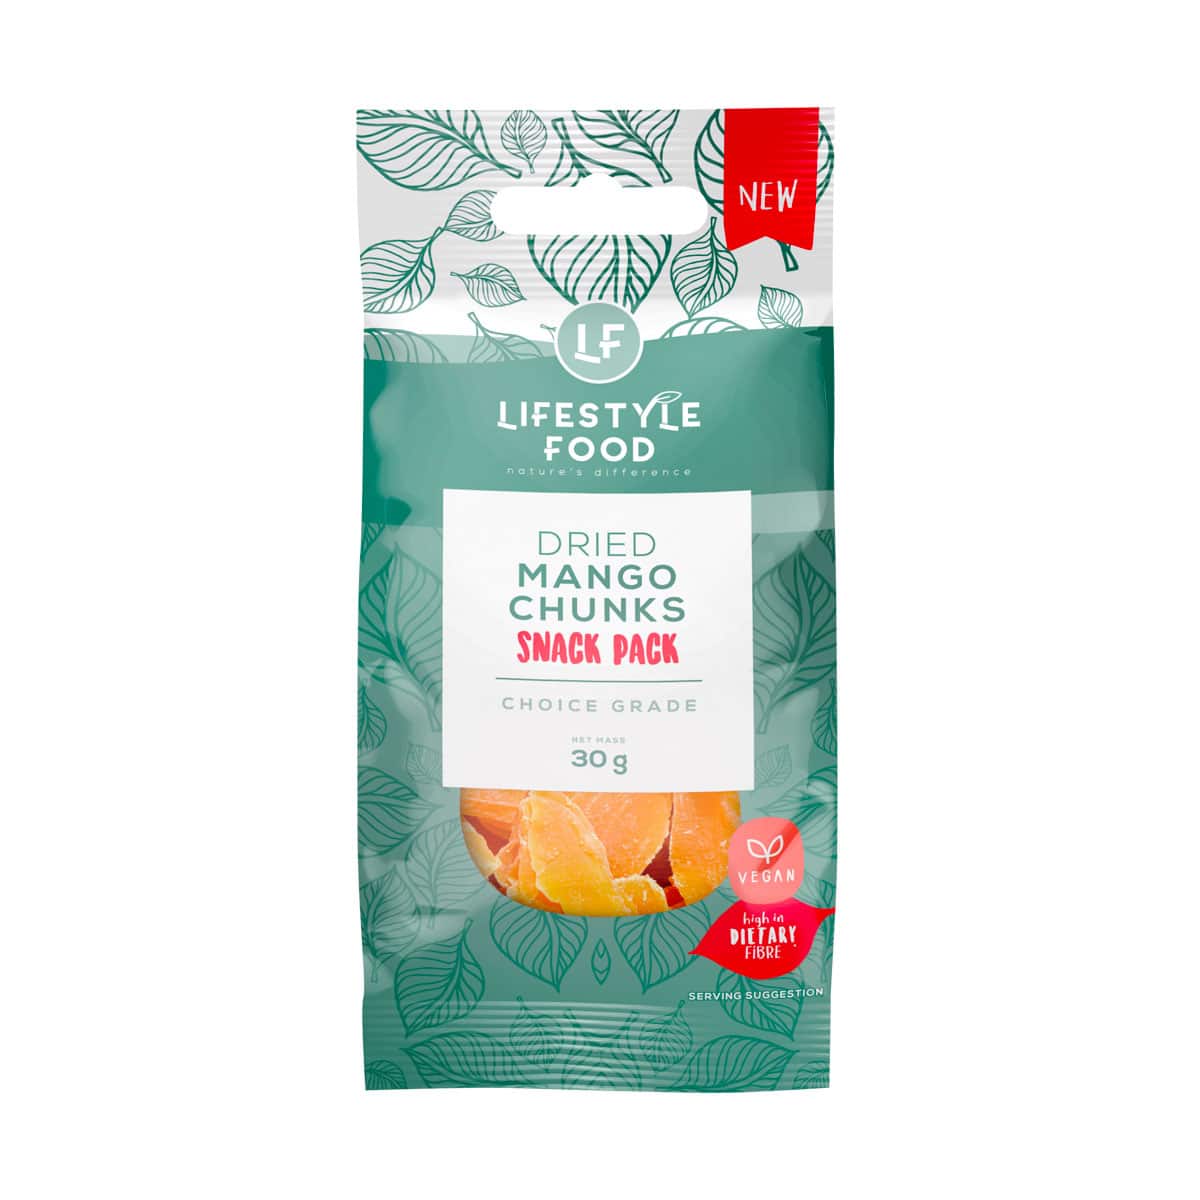 Lifestyle Food Dried Mango Chunks Snack Pack - 30g